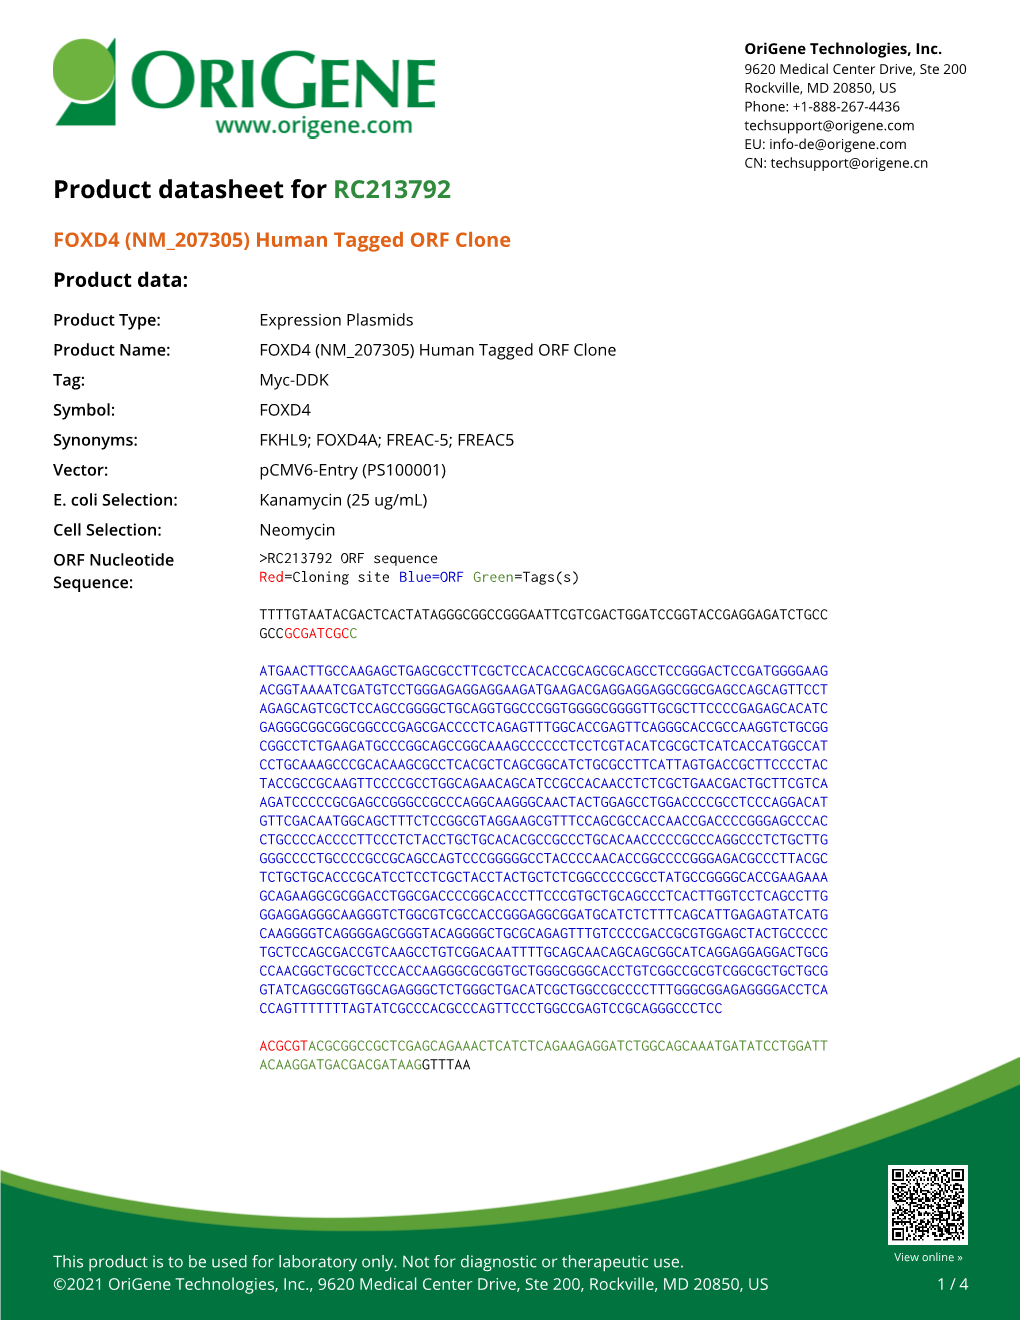 FOXD4 (NM 207305) Human Tagged ORF Clone – RC213792